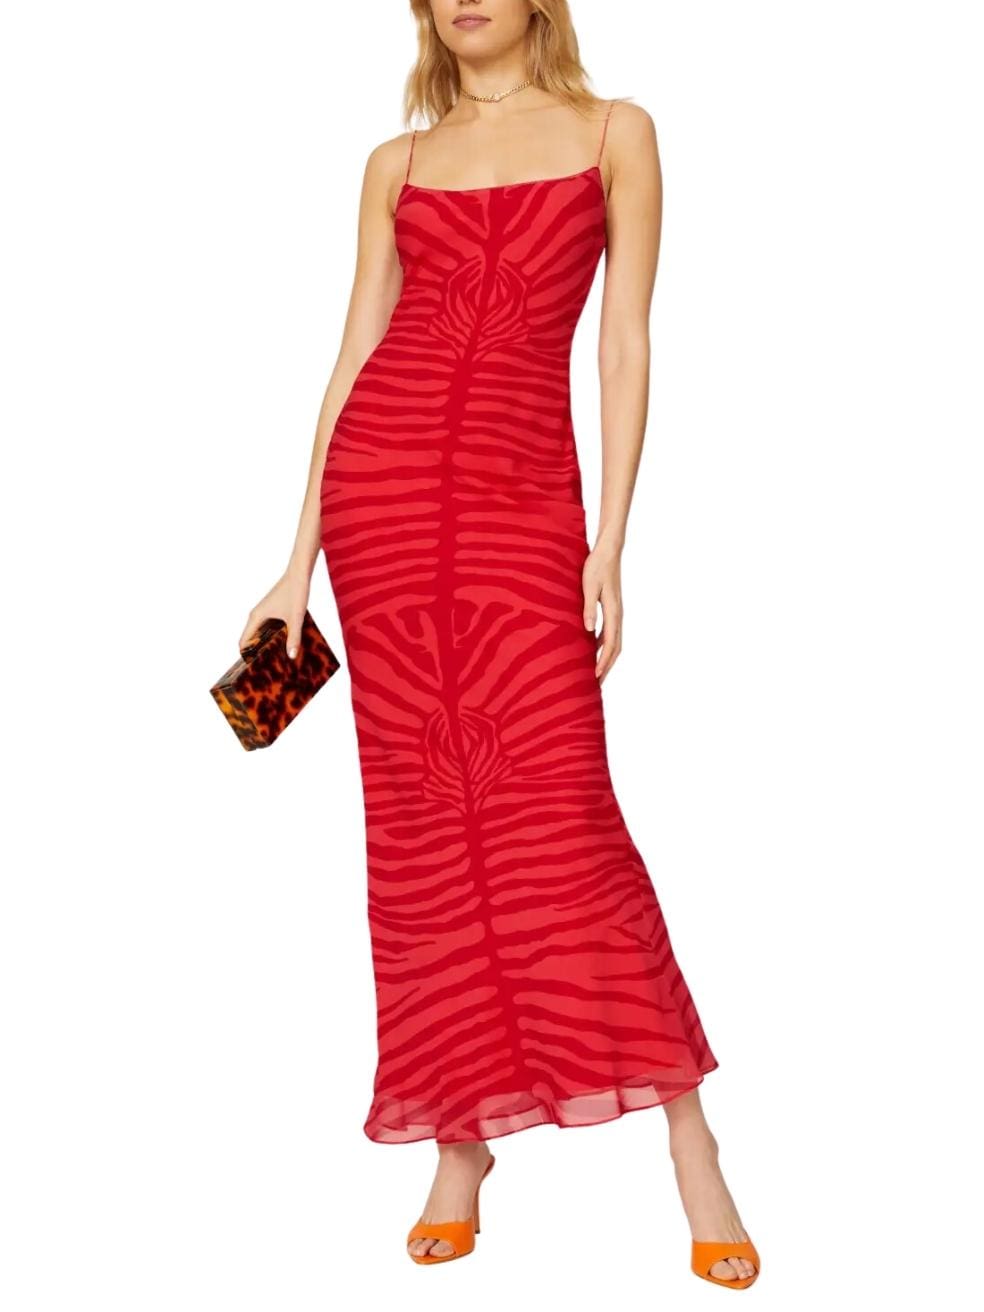 Scarlette Zebra Dress in Red